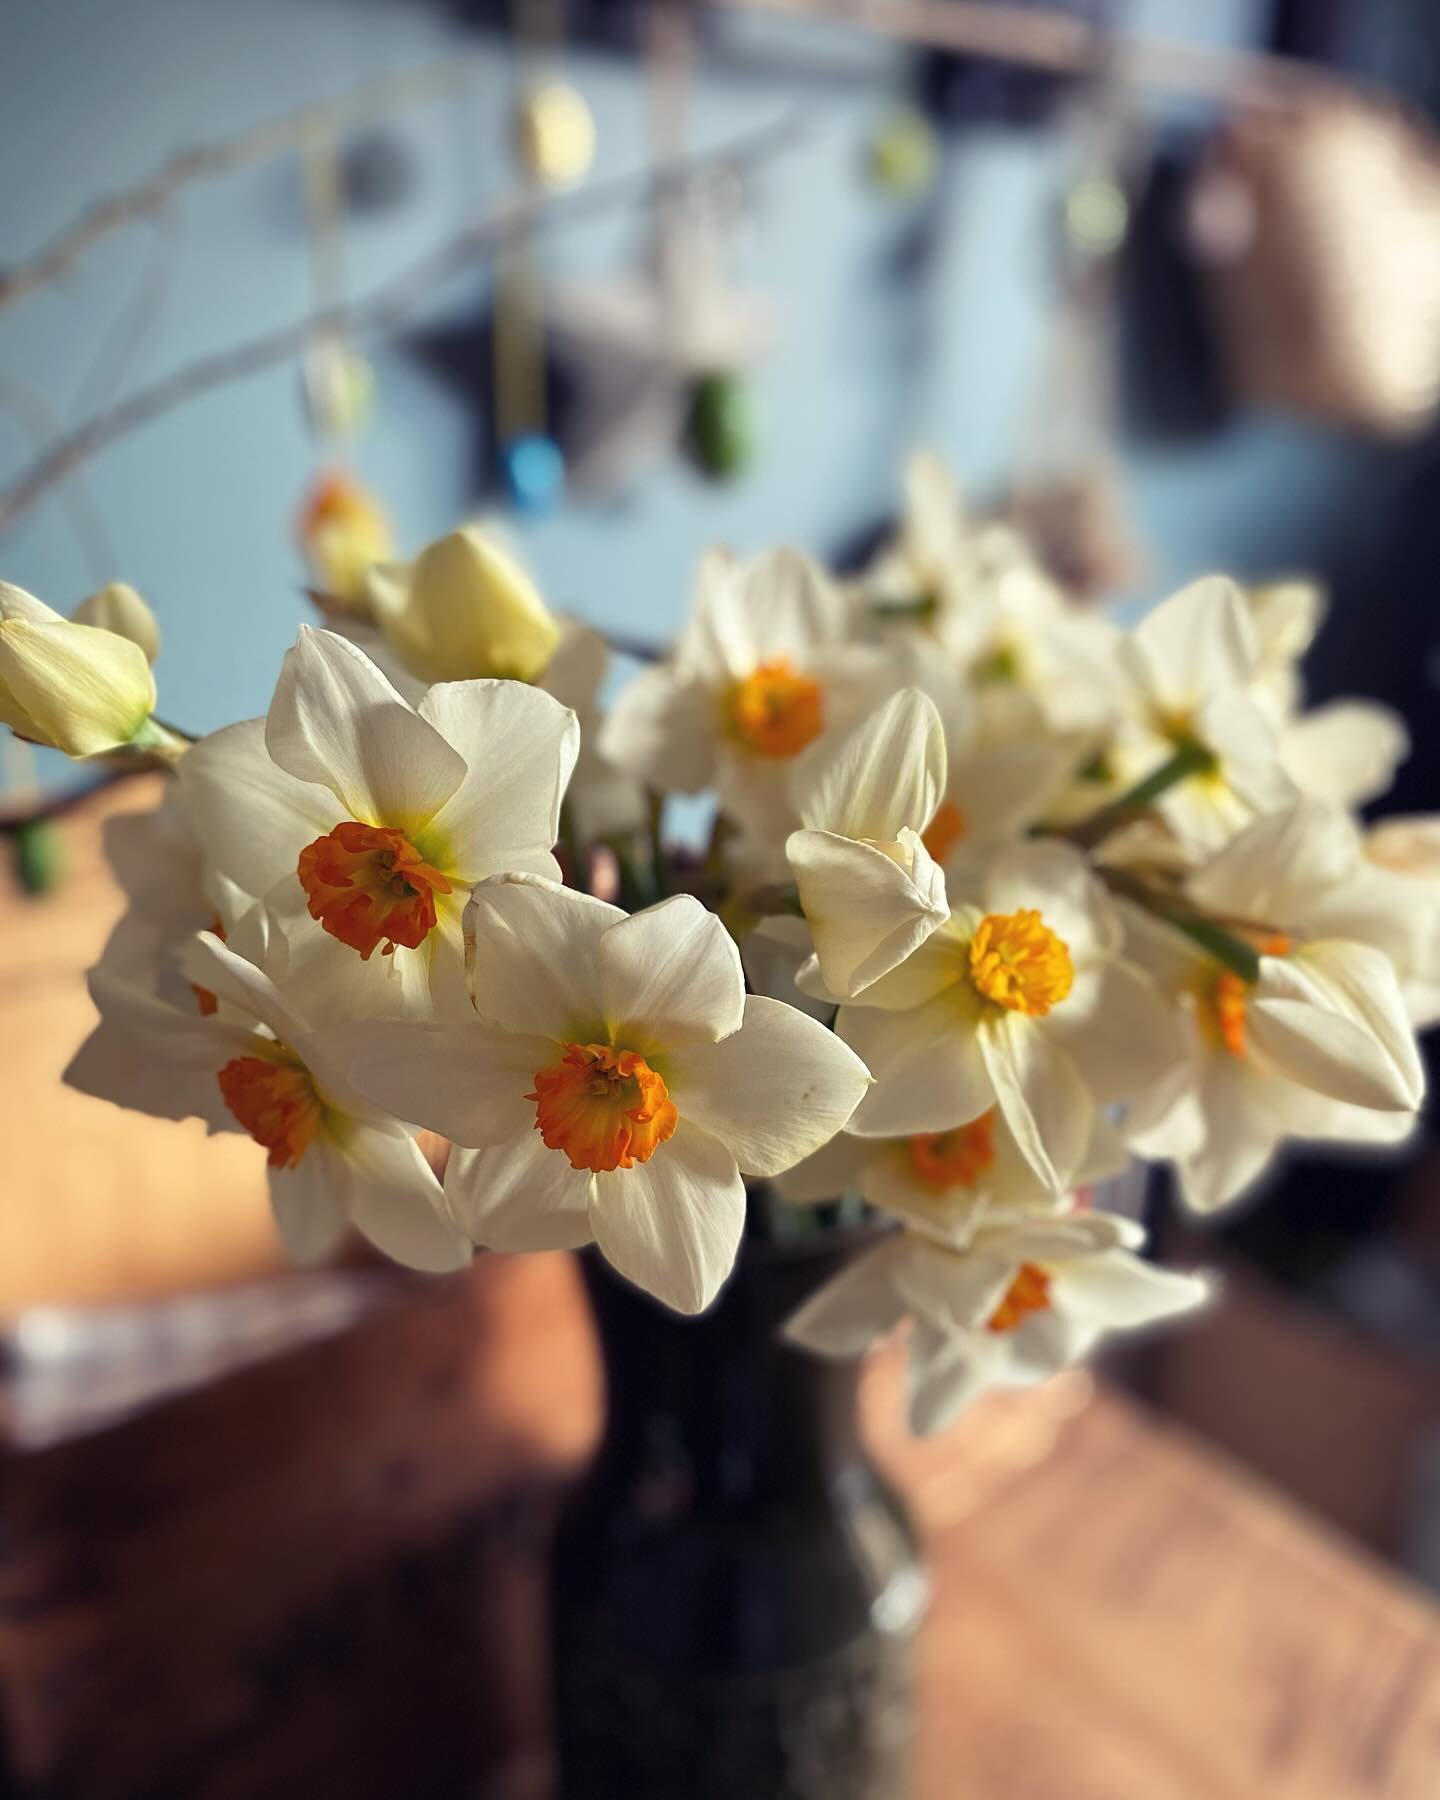 Happy Springtime 🐣🐰🌷

Gotta love the daffodils&hellip; 😍